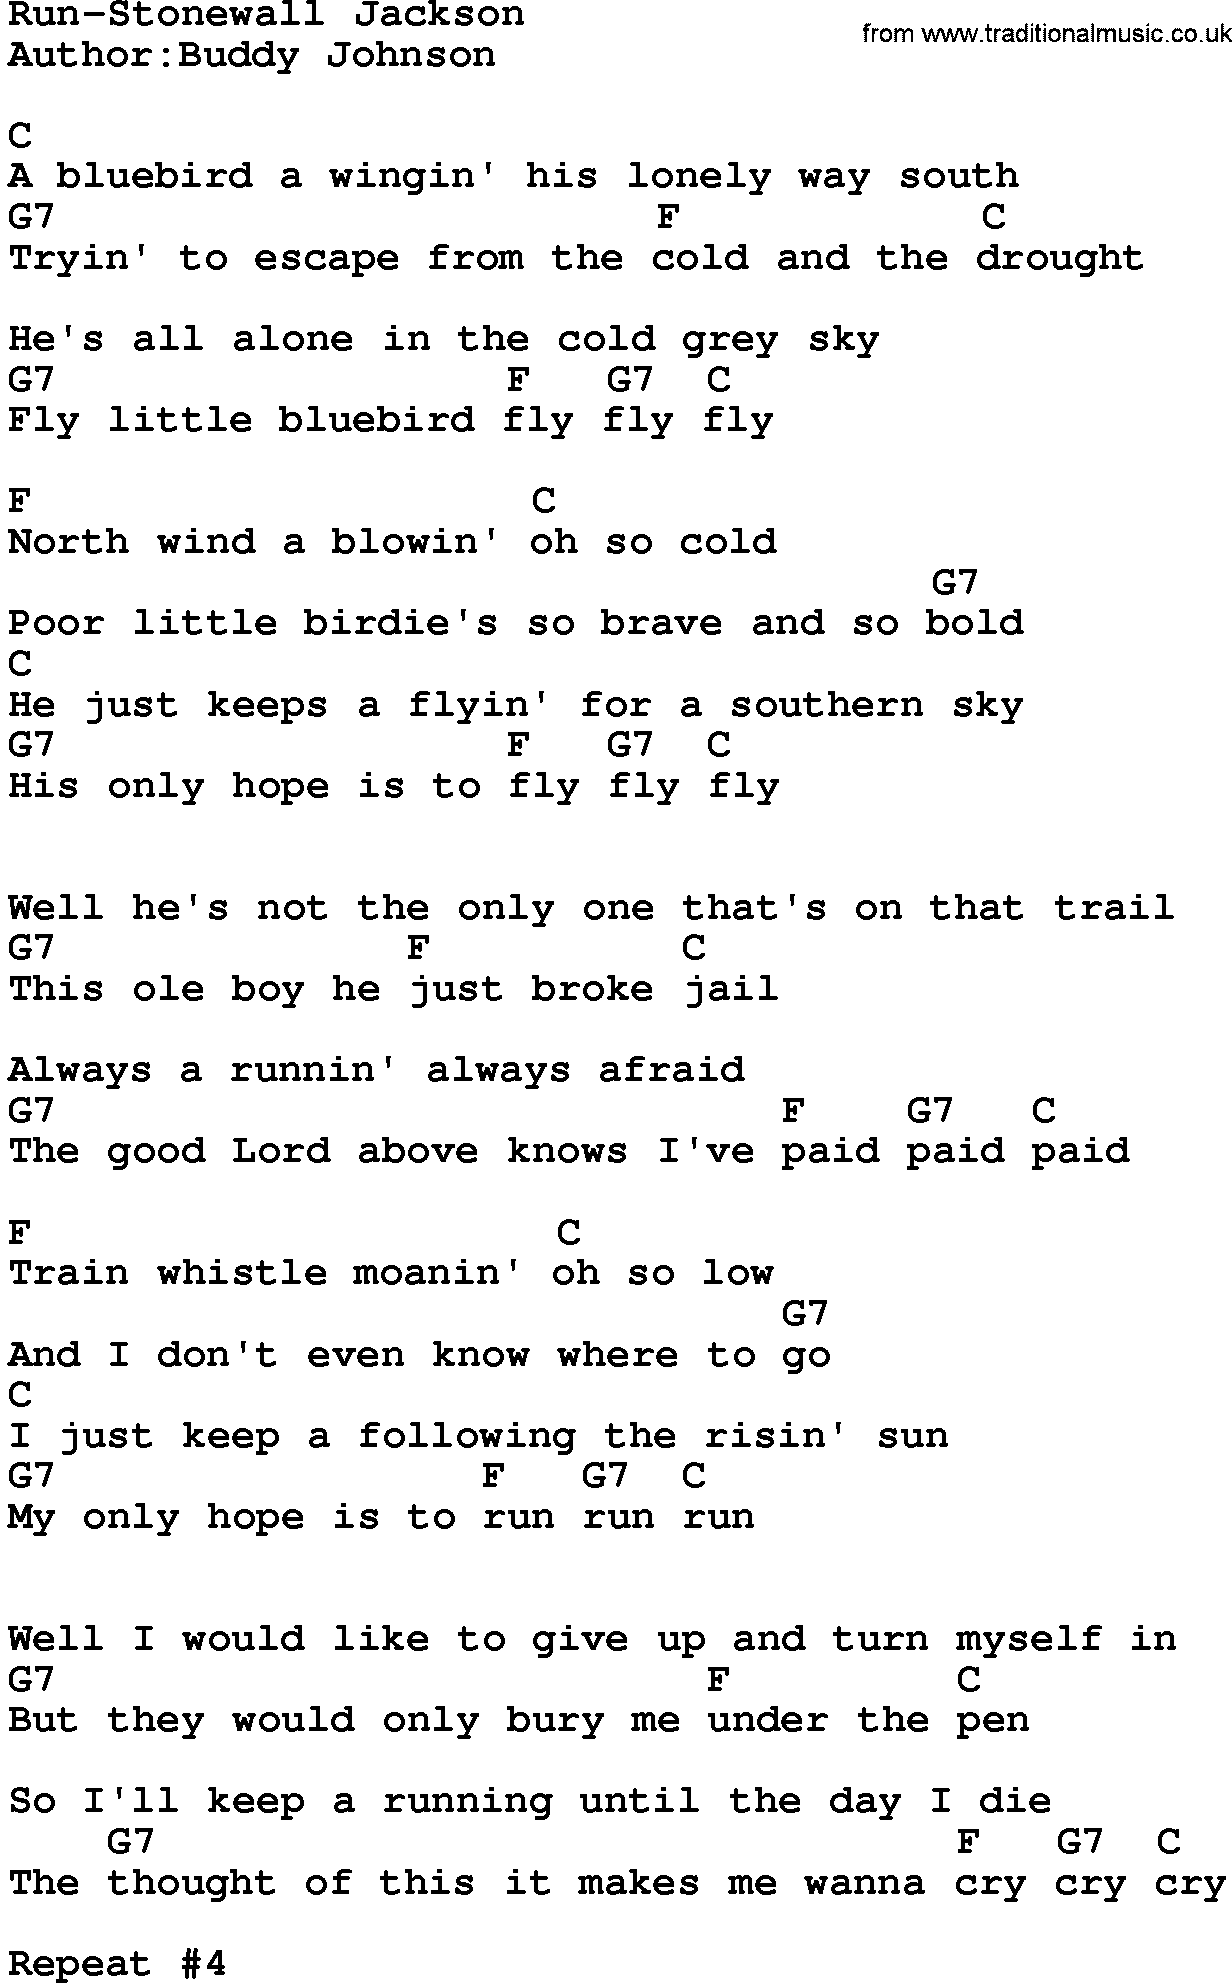 Country music song: Run-Stonewall Jackson lyrics and chords